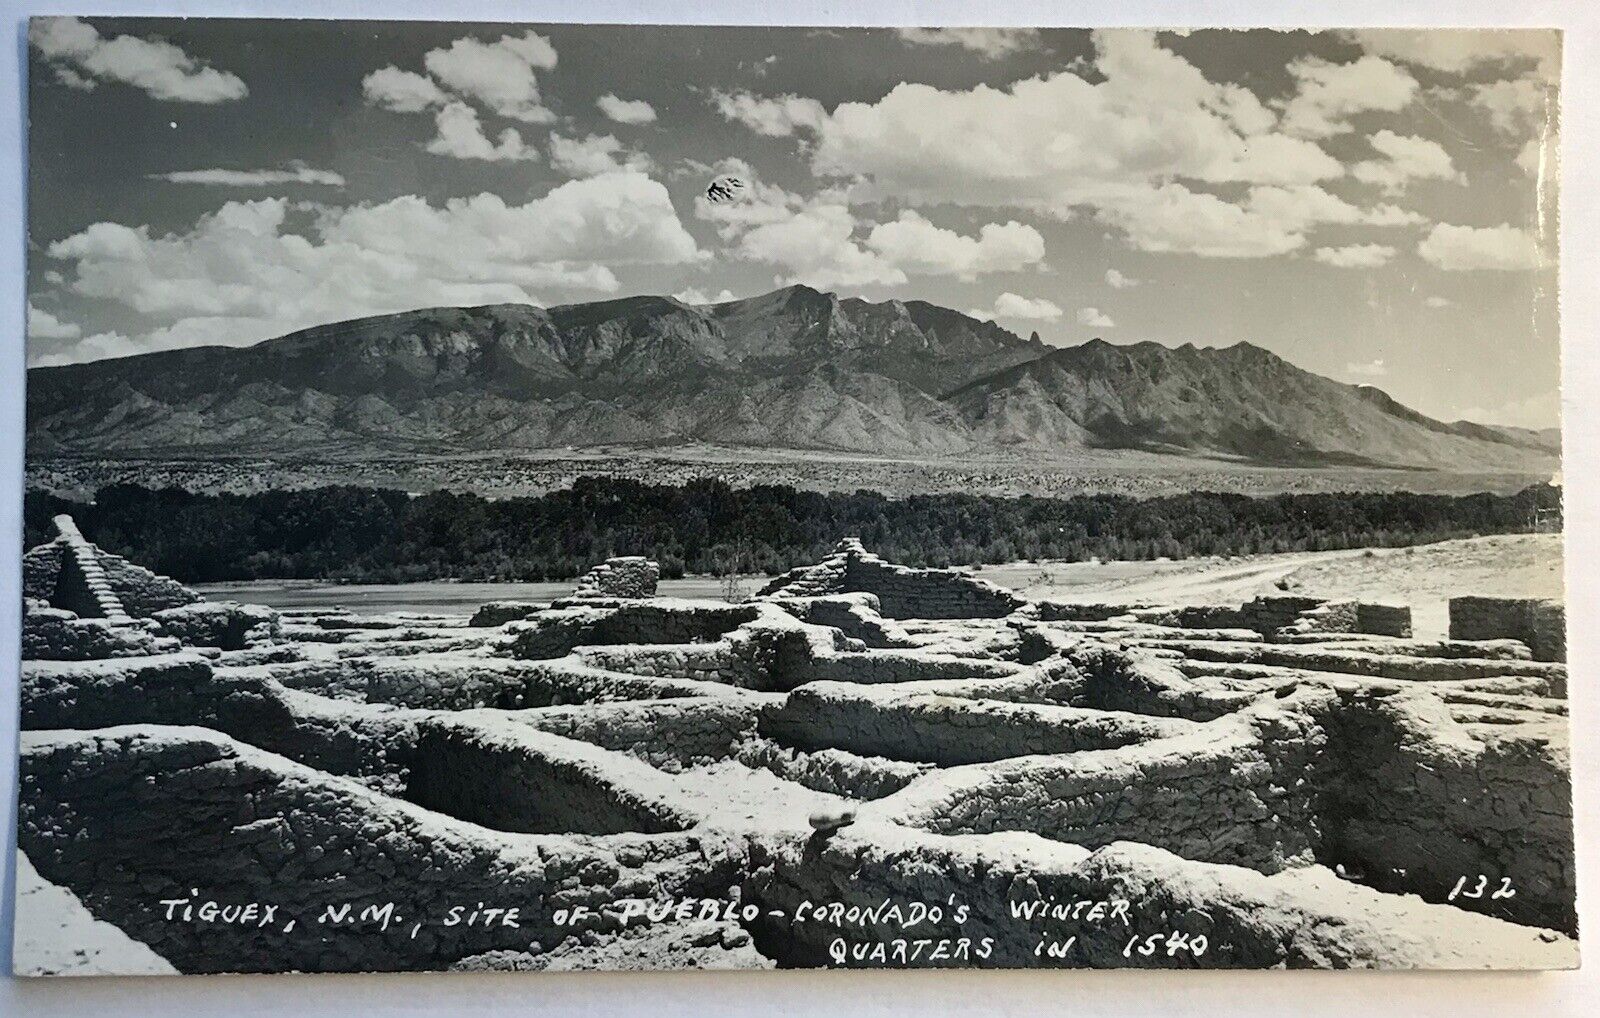 Tiguex New Mexico Site of Pueblo Coronado’s Winter Quarters in 1540 RPPC Postcar